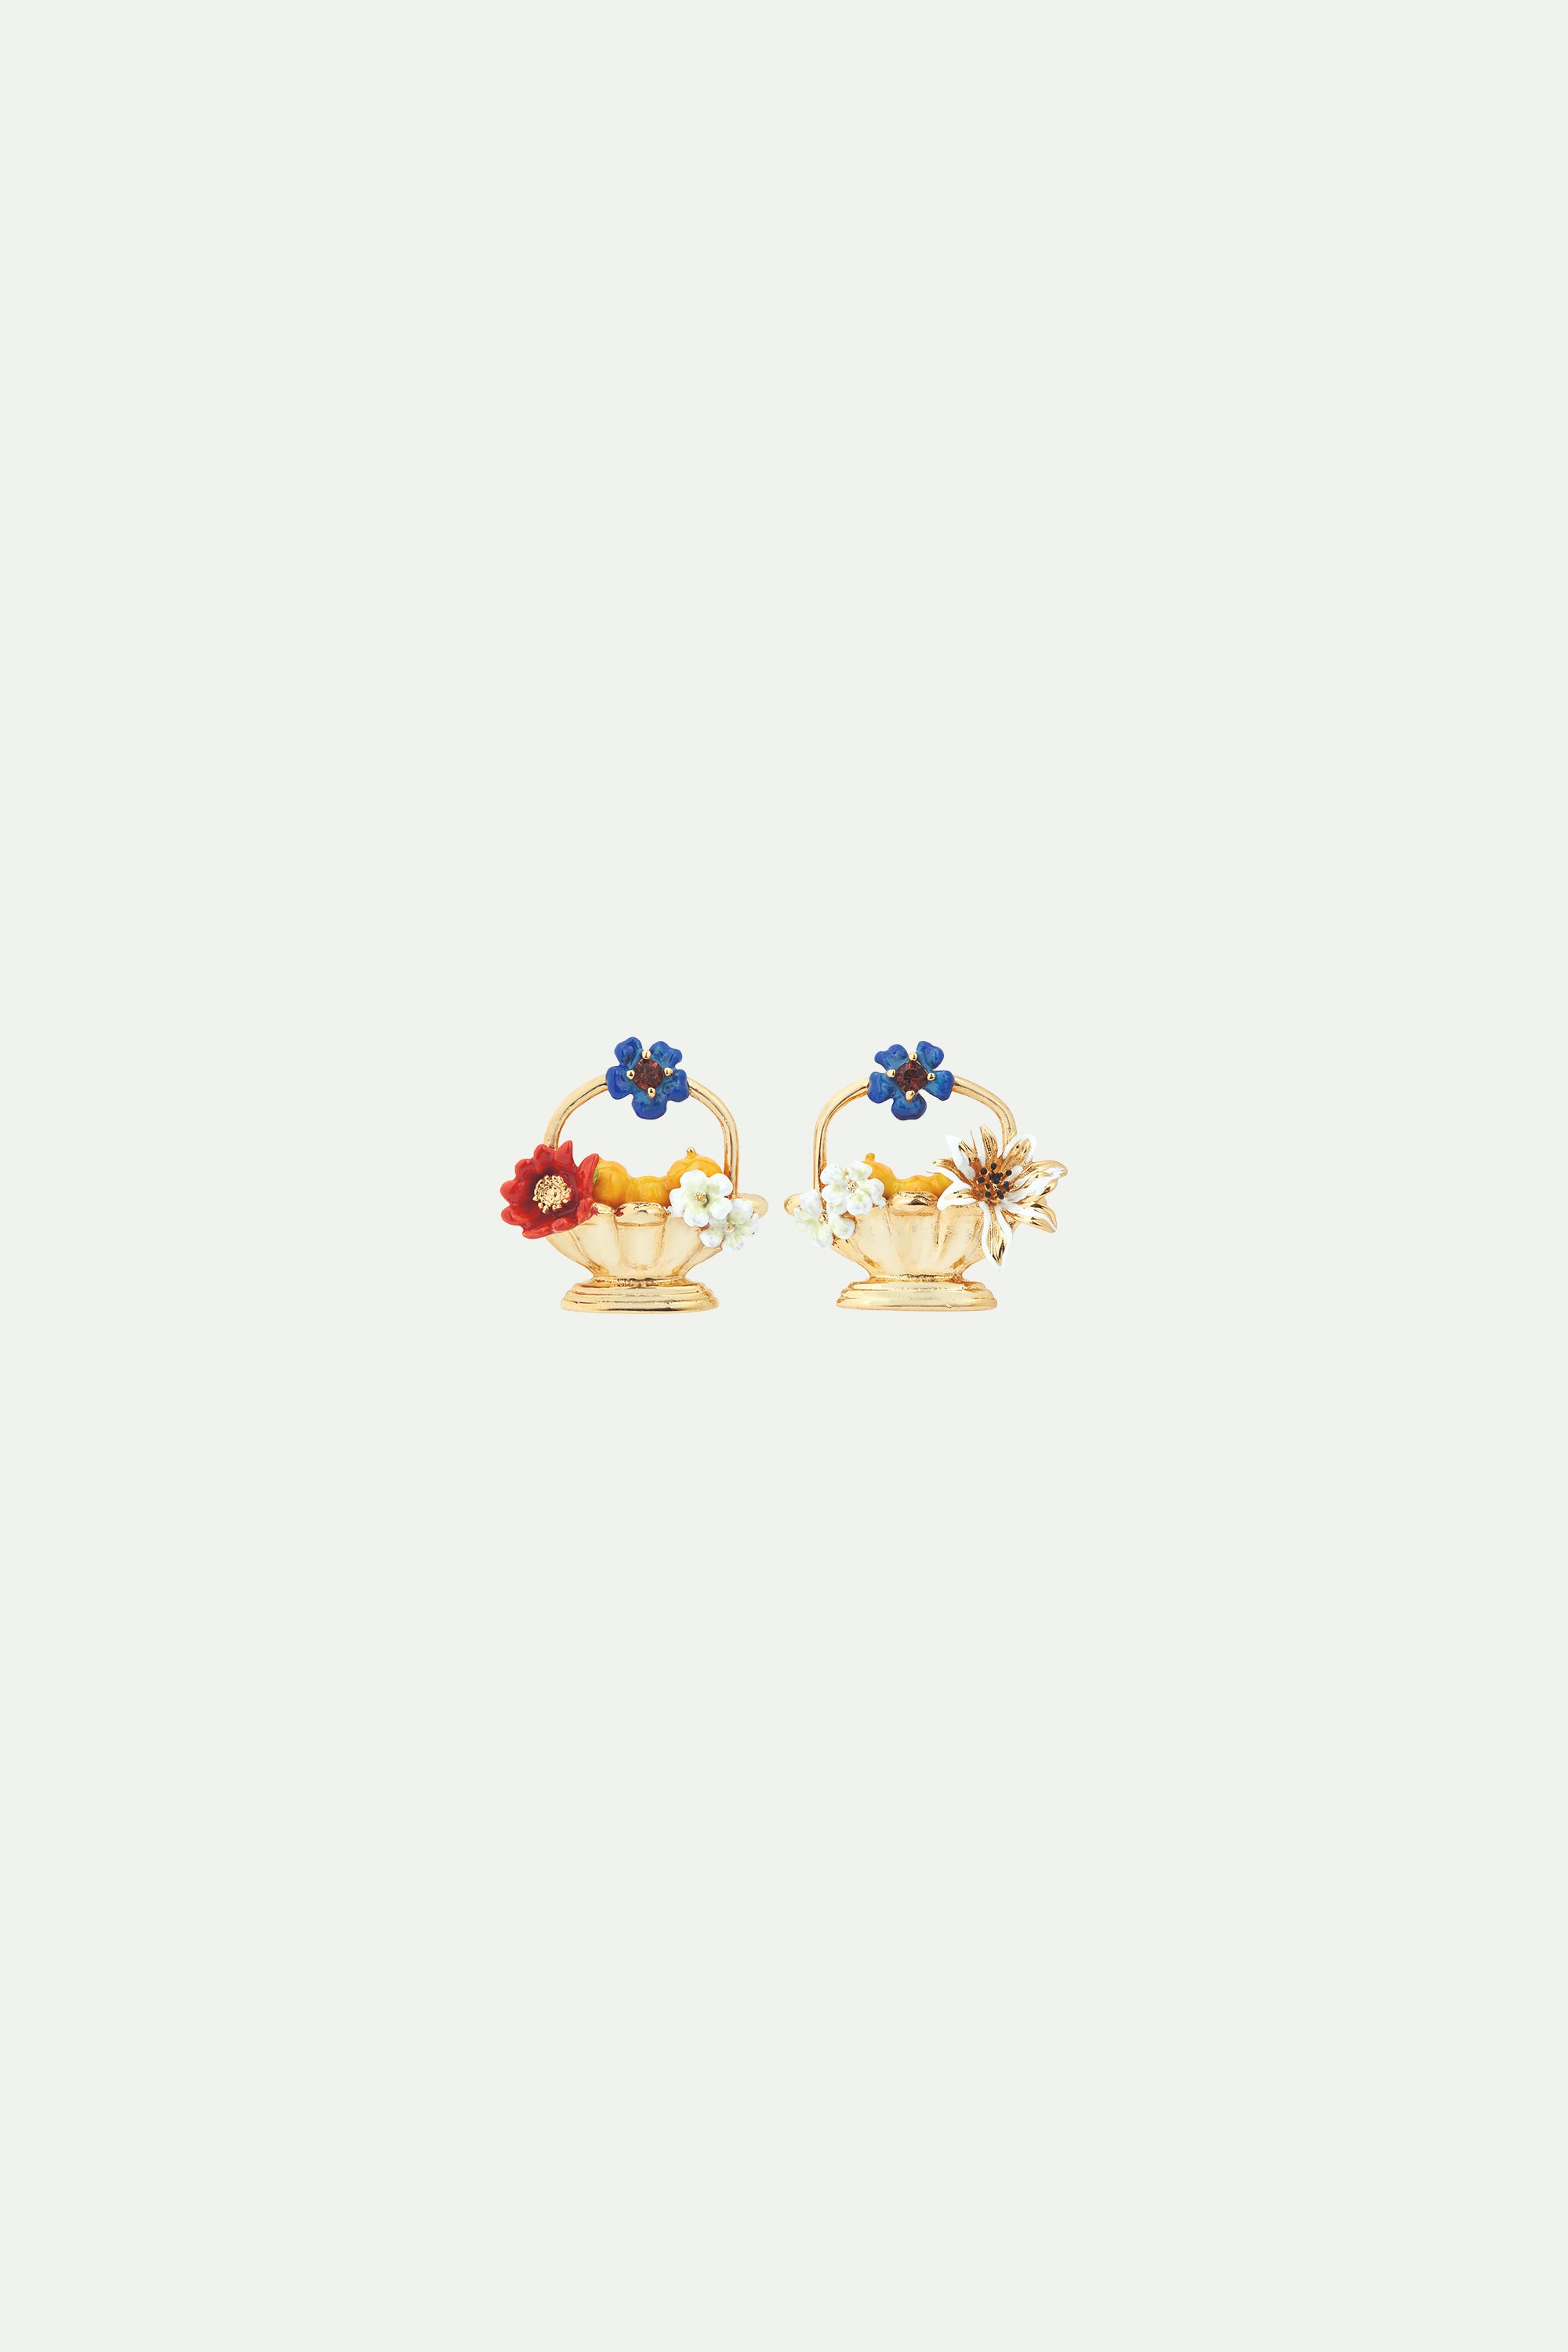 Fruit bowls and flower post earrings